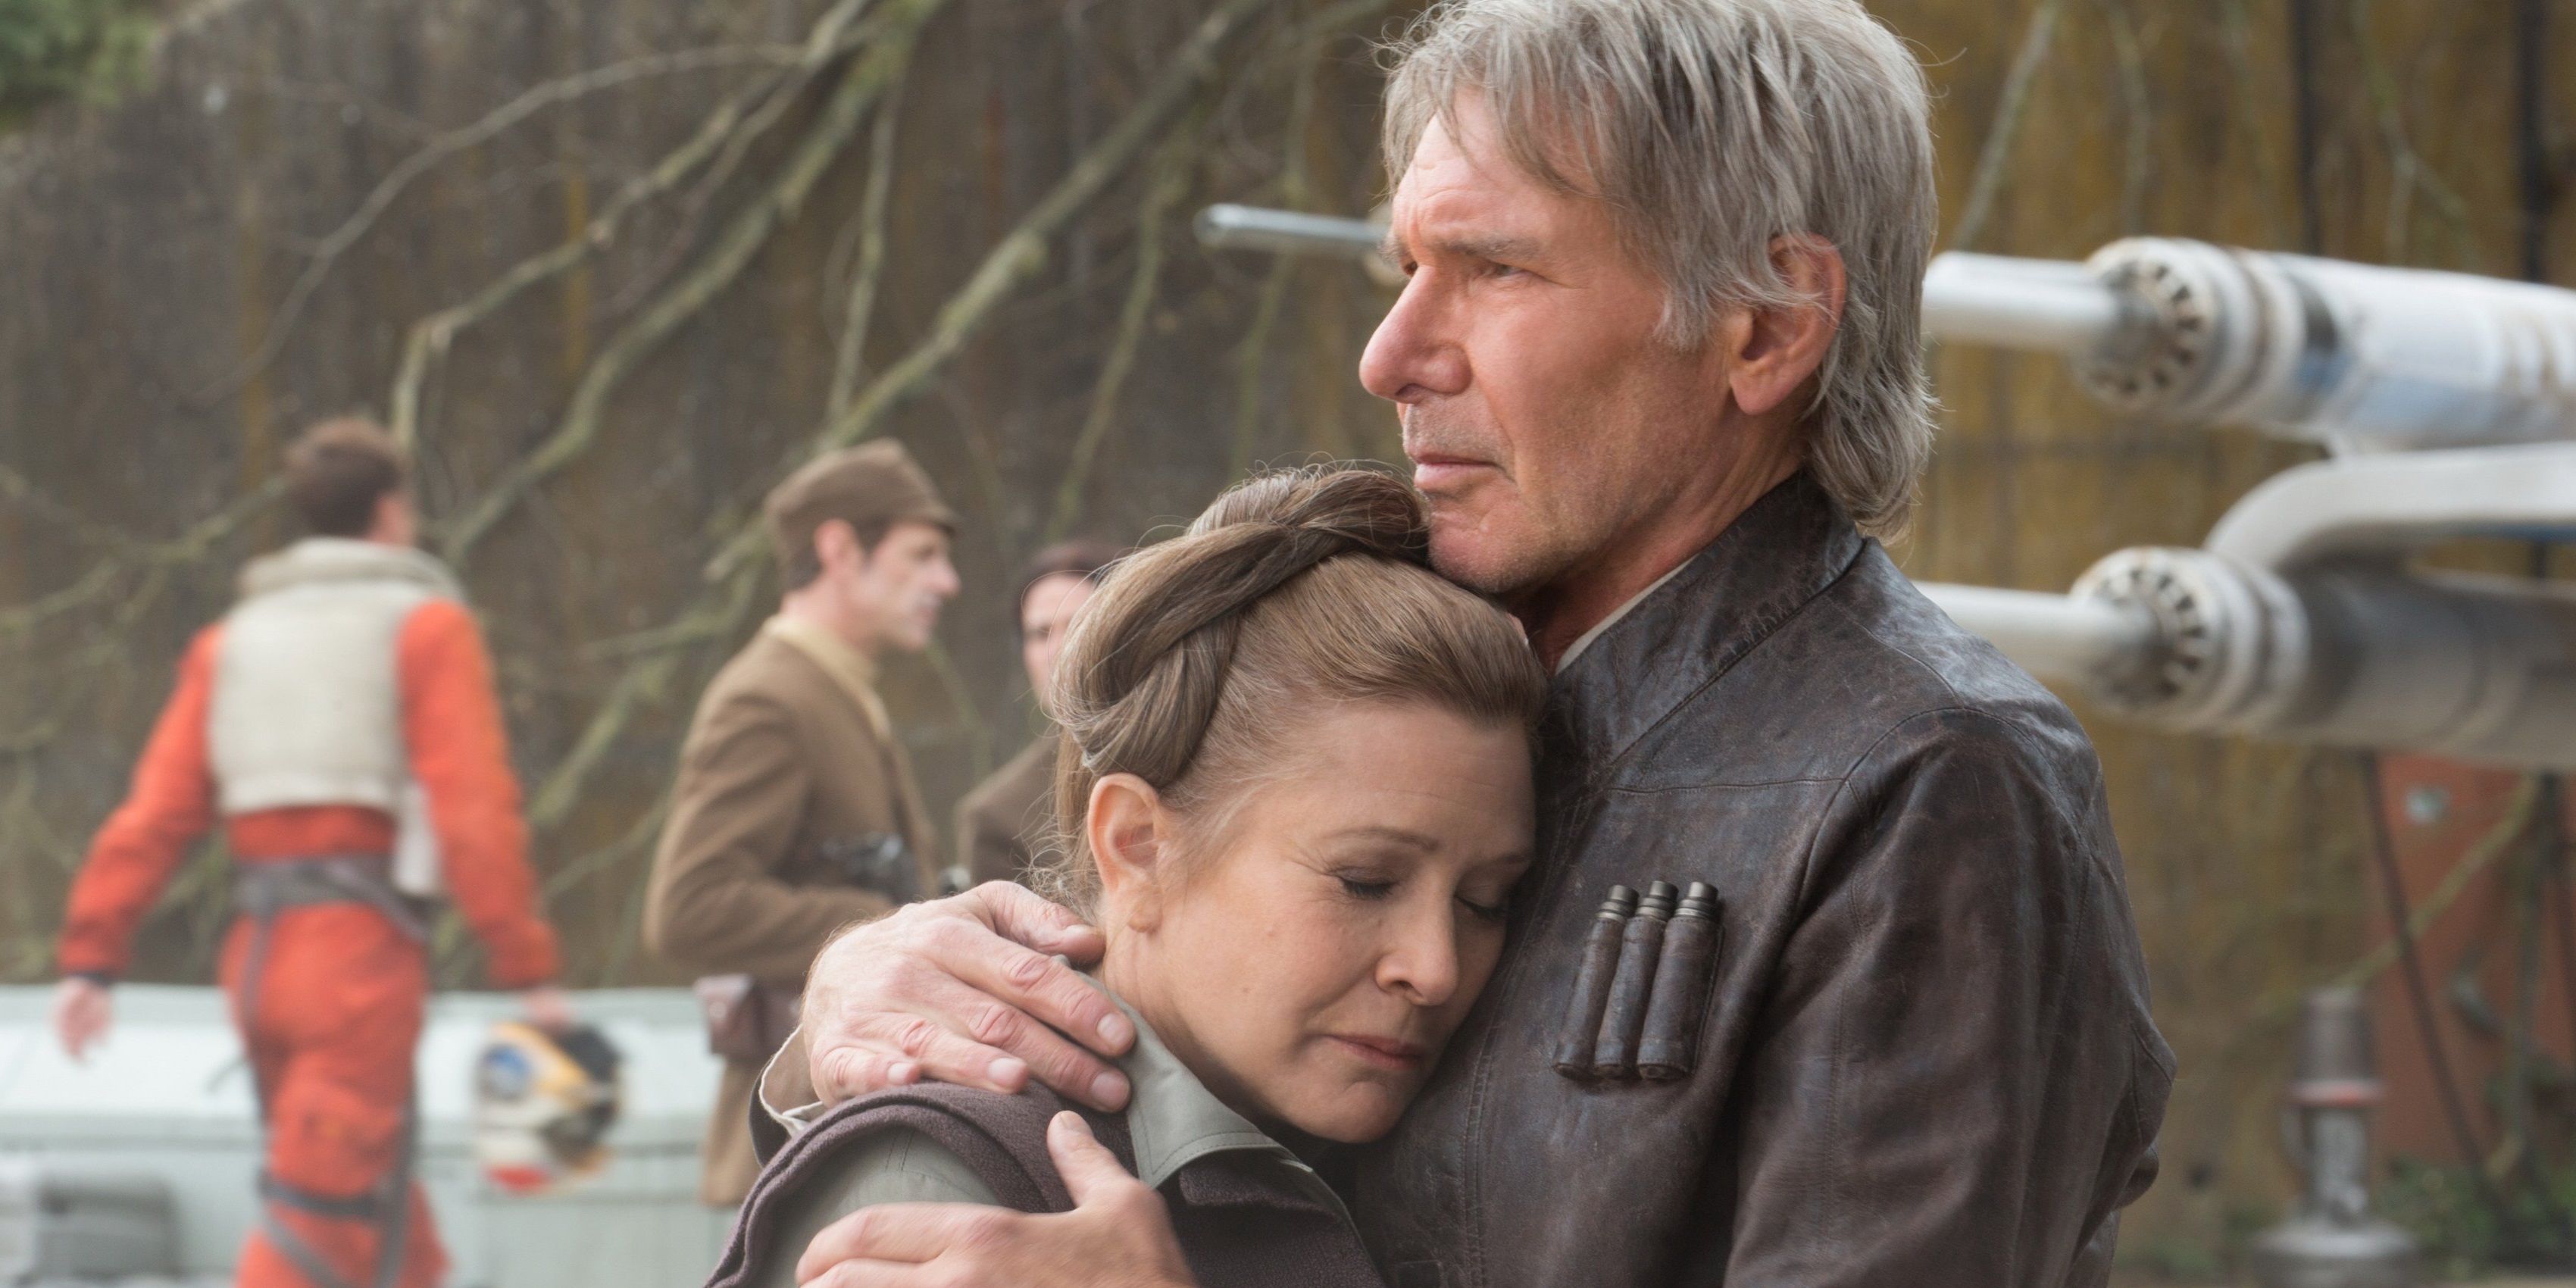 Han and Leia hug goodbye in The Force Awakens